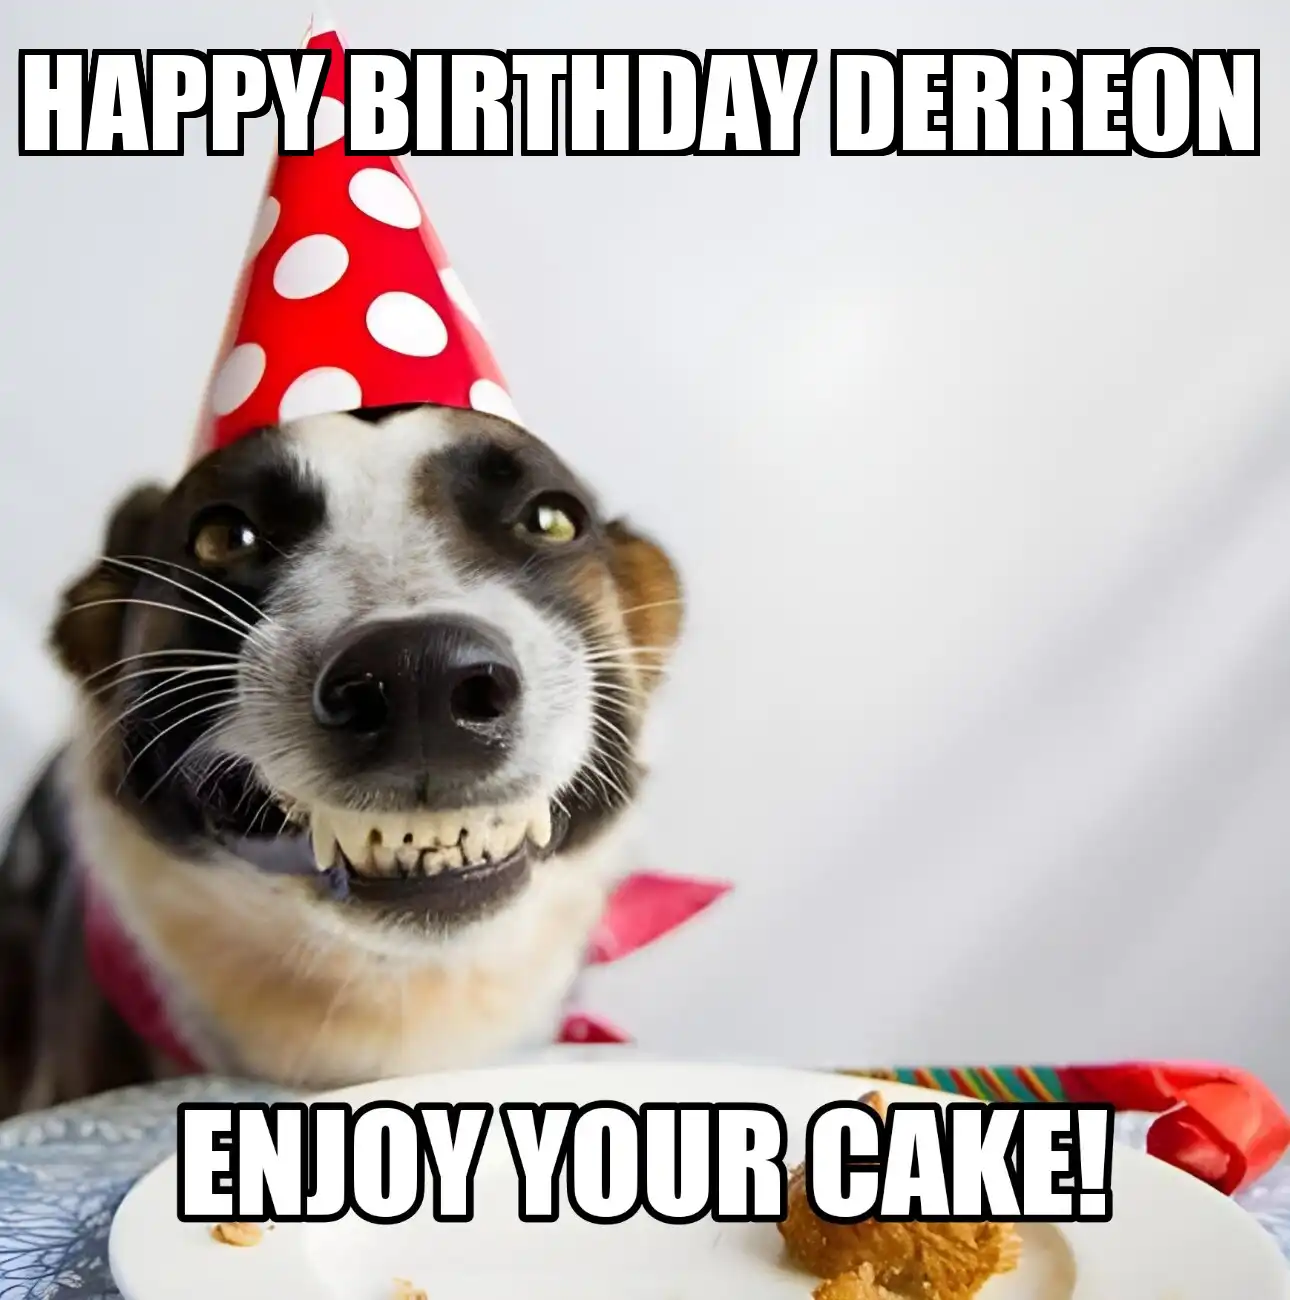 Happy Birthday Derreon Enjoy Your Cake Dog Meme